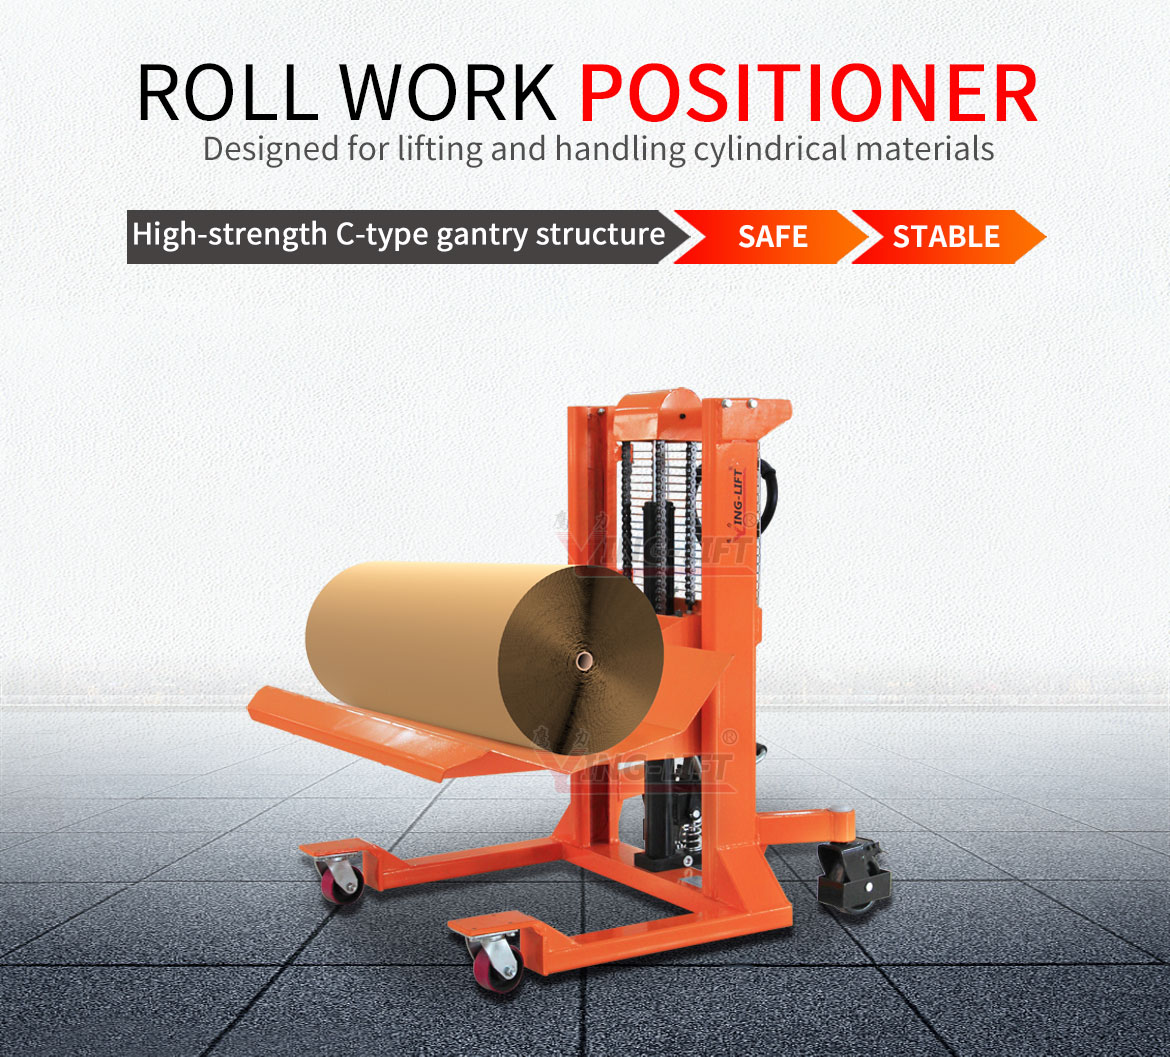 Roll Work Positioner